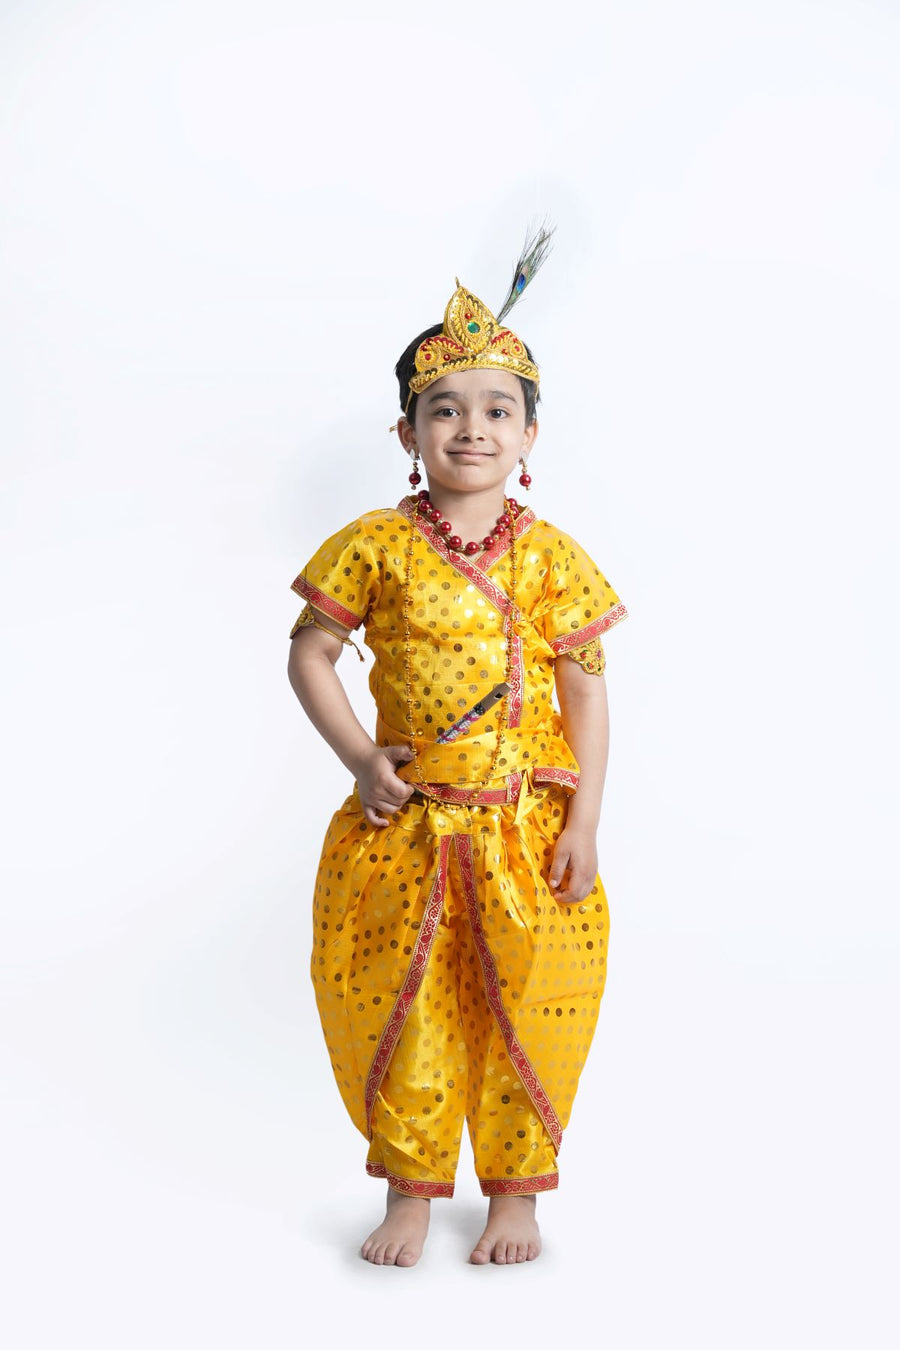 Buy Sarvda Krishna Dress for Kids | Shri Krishna Dress for Baby Boy |  Janmashtami kanha constume for boy and Girl Age 3 Months 6 Months, 1 2 3 4  5 6 7 8 Years (6-12 Months) at Amazon.in